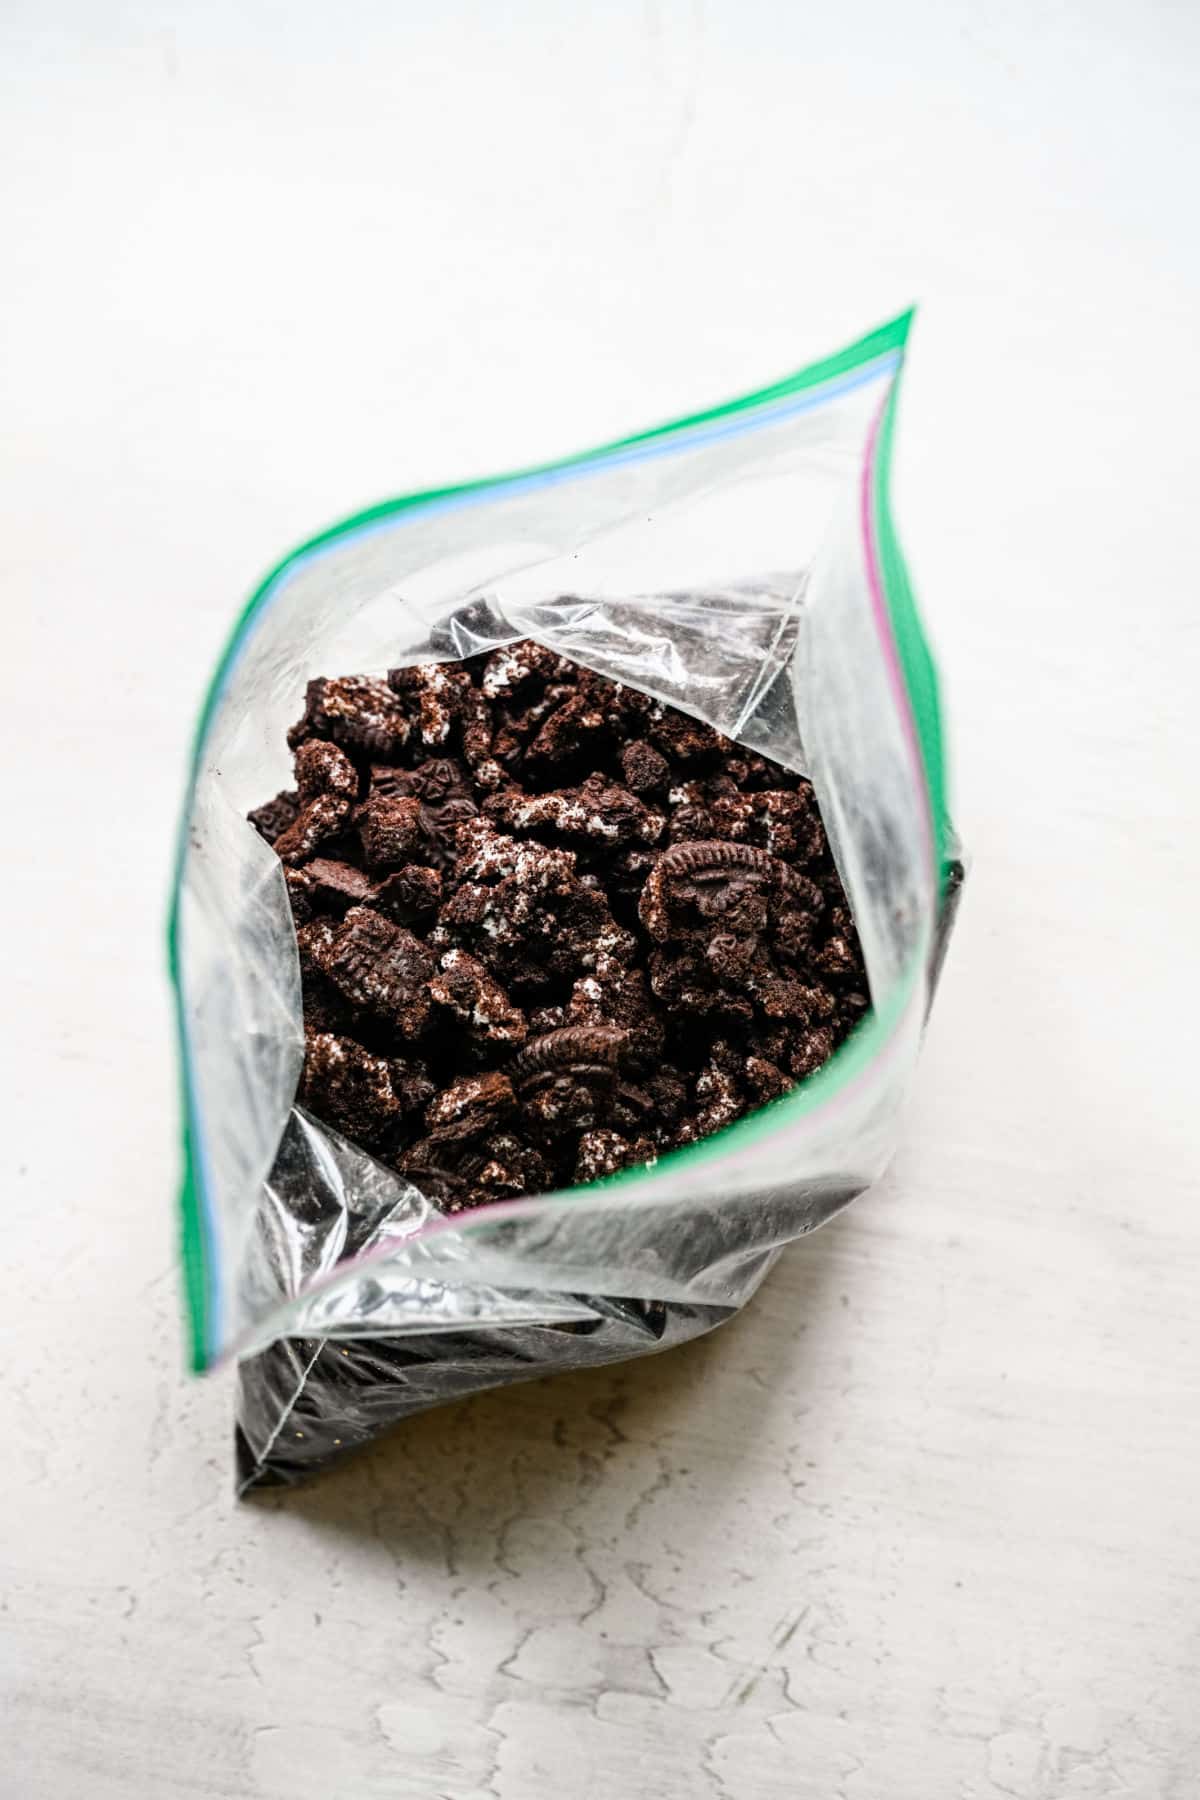 Crushed oreos in an open ziploc bag.